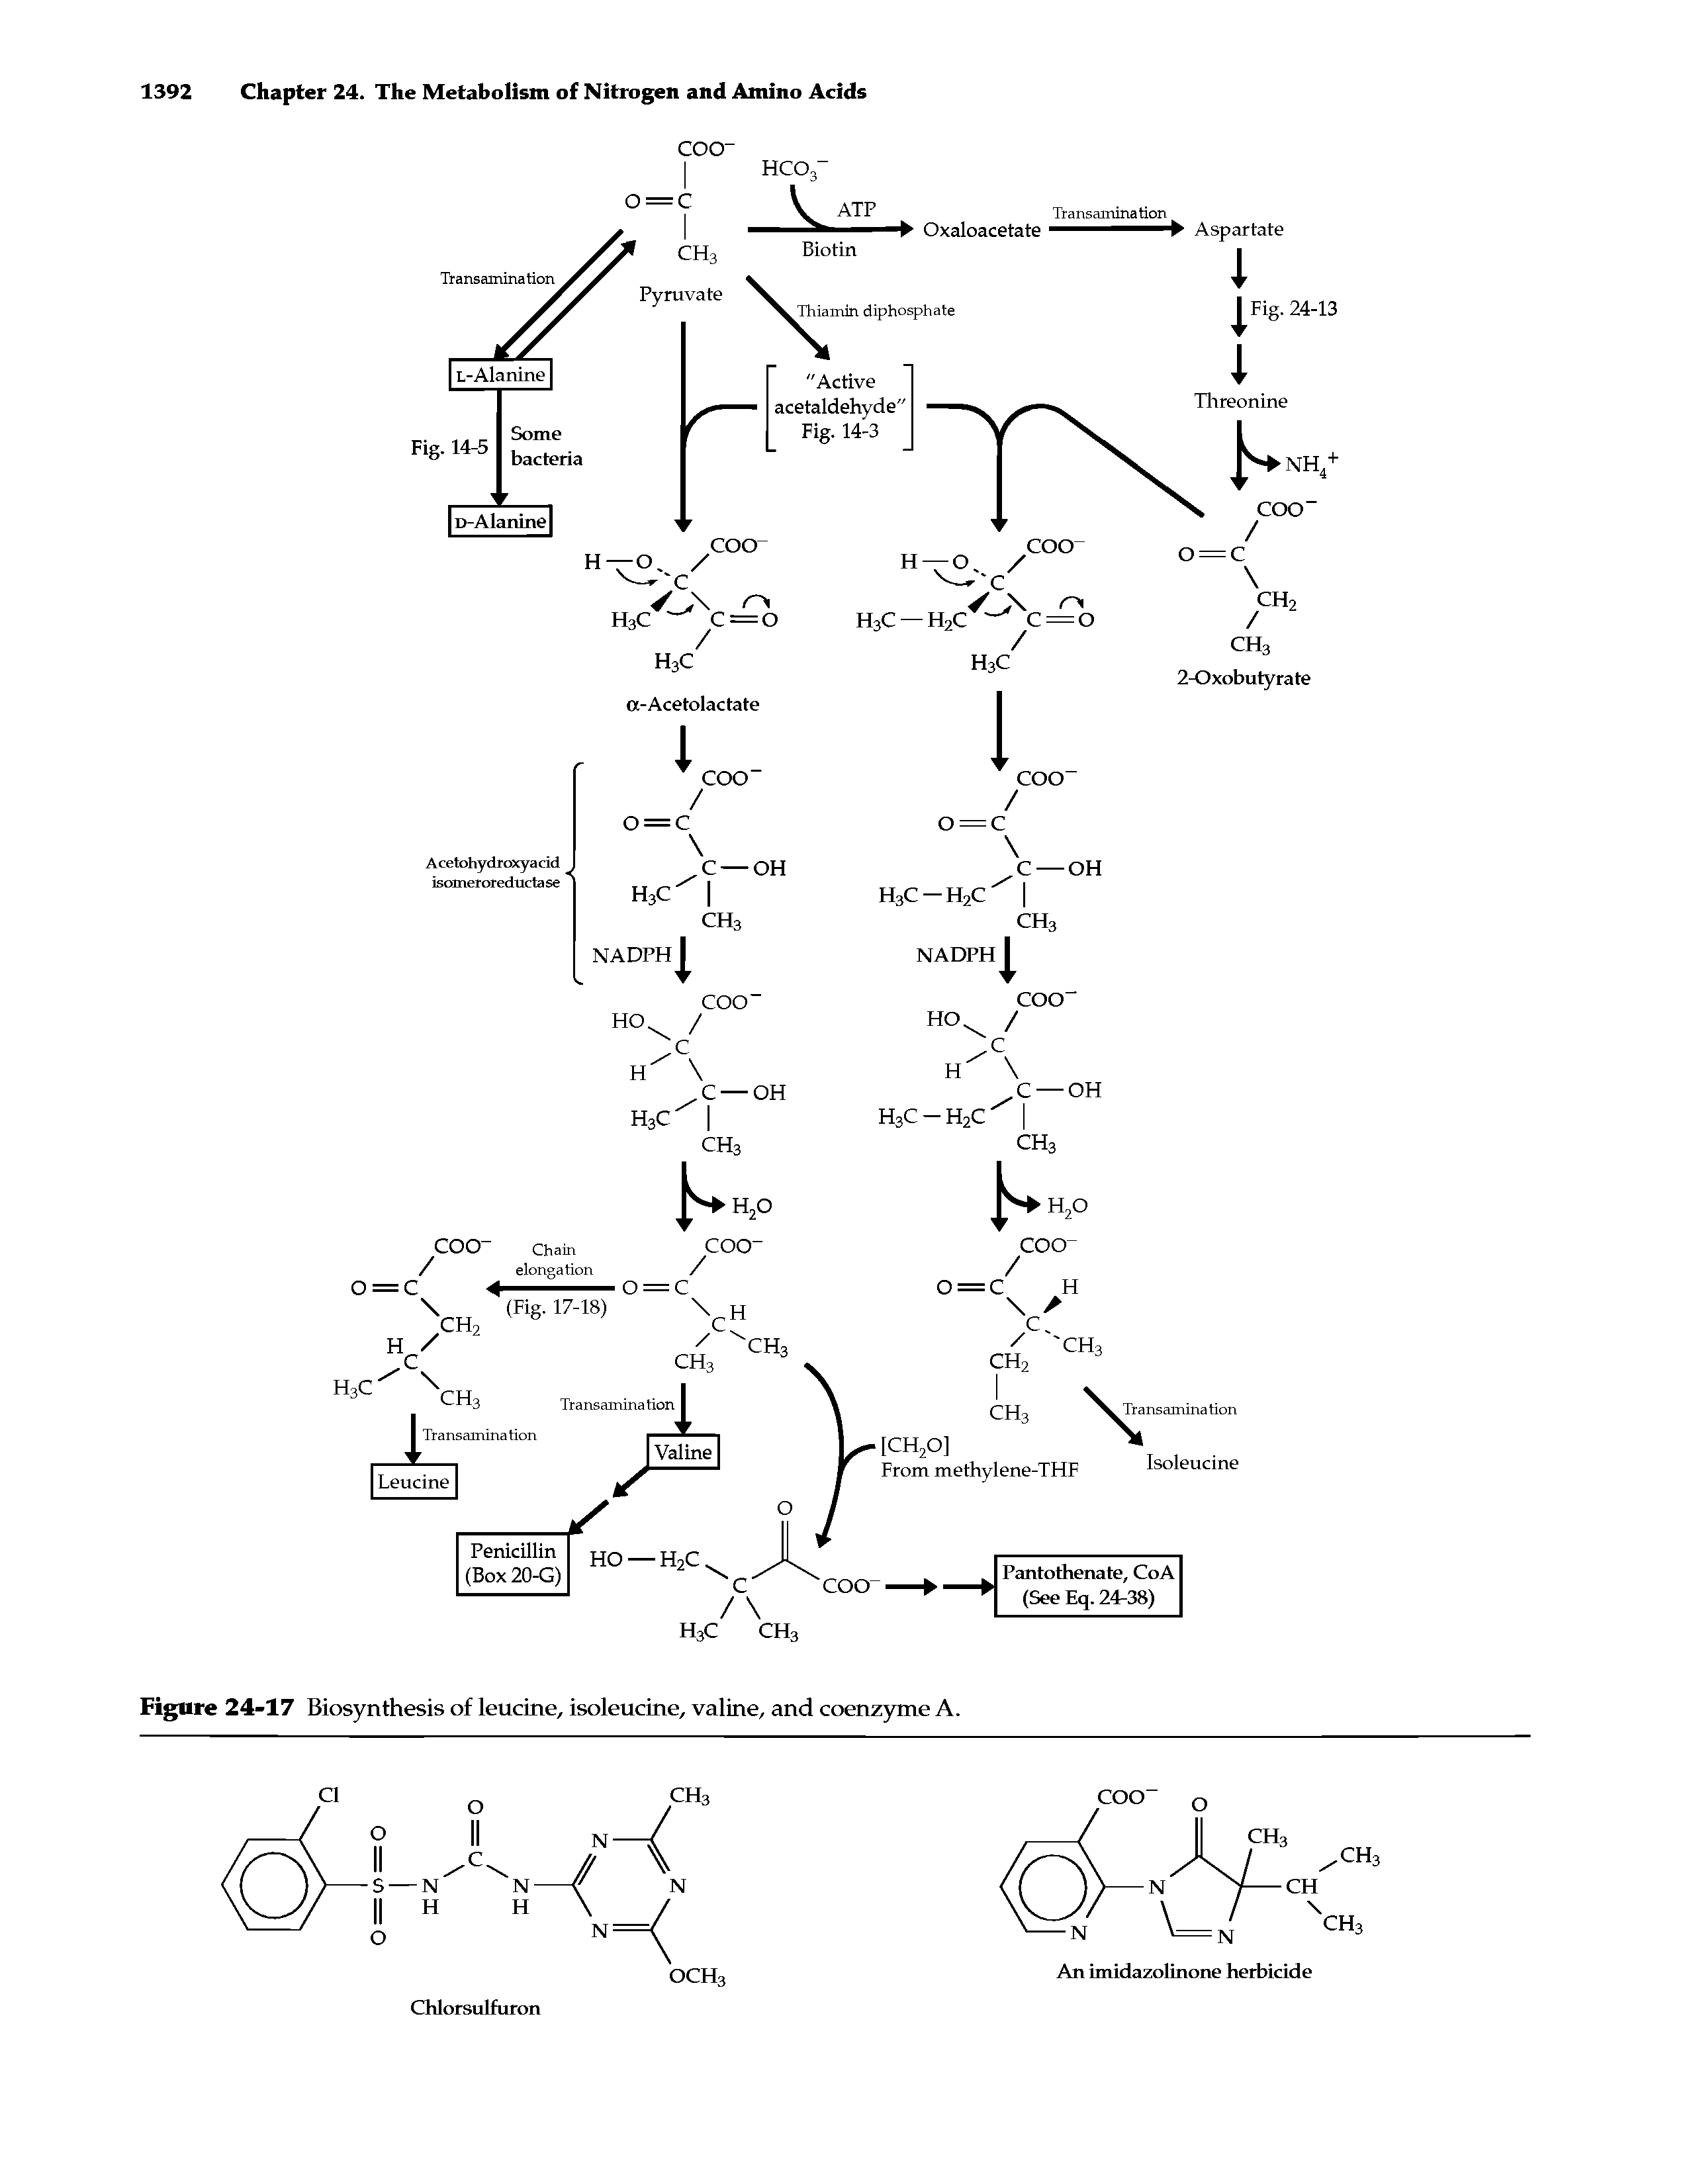 Figure 24-17 Biosynthesis of leucine, isoleucine, valine, and coenzyme A.